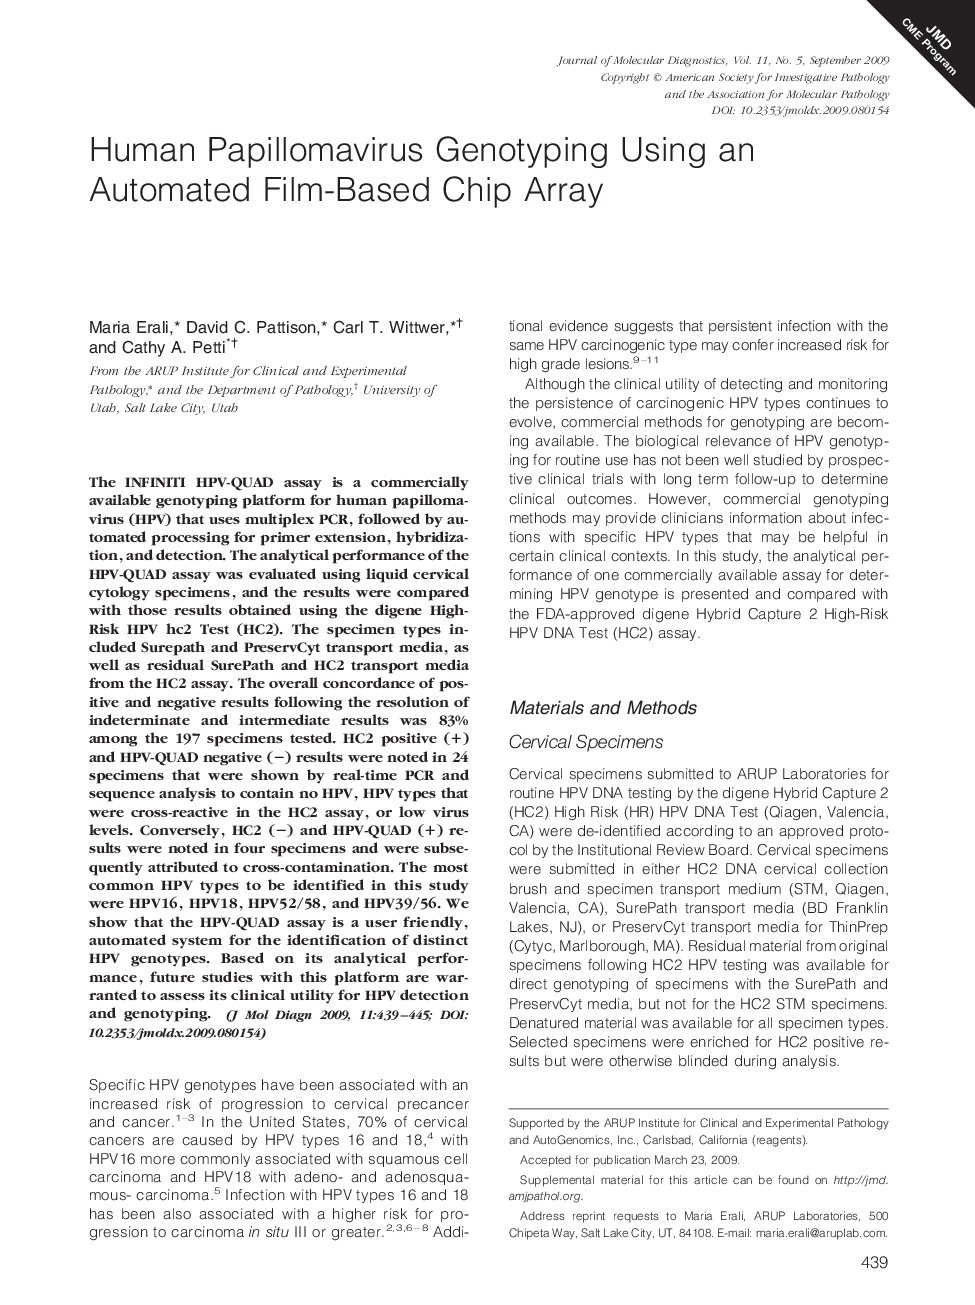 Regular ArticlesHuman Papillomavirus Genotyping Using an Automated Film-Based Chip Array